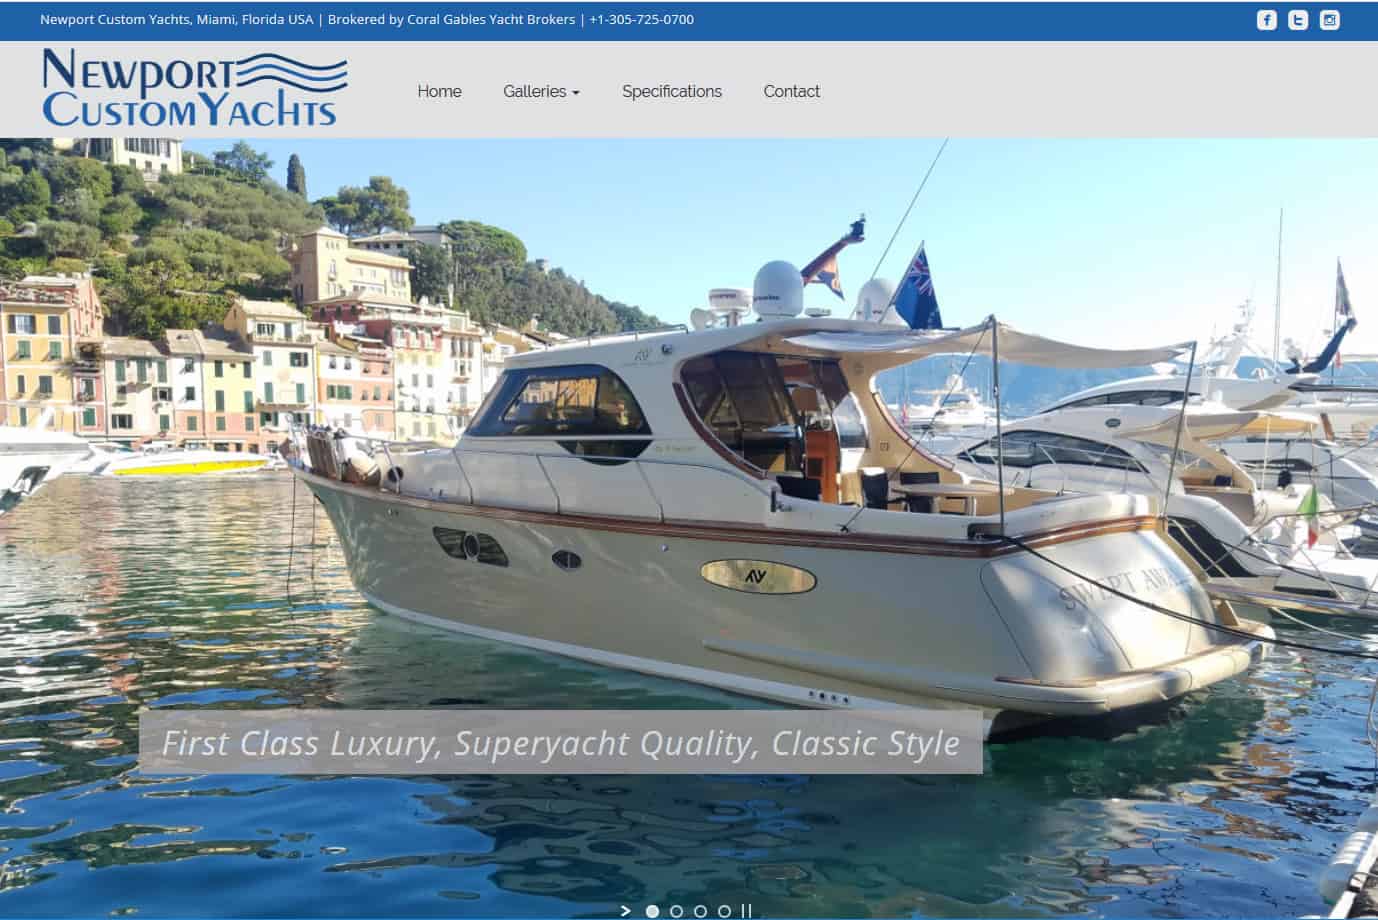 Newport Custom Yachts Website by iSatisfy.com